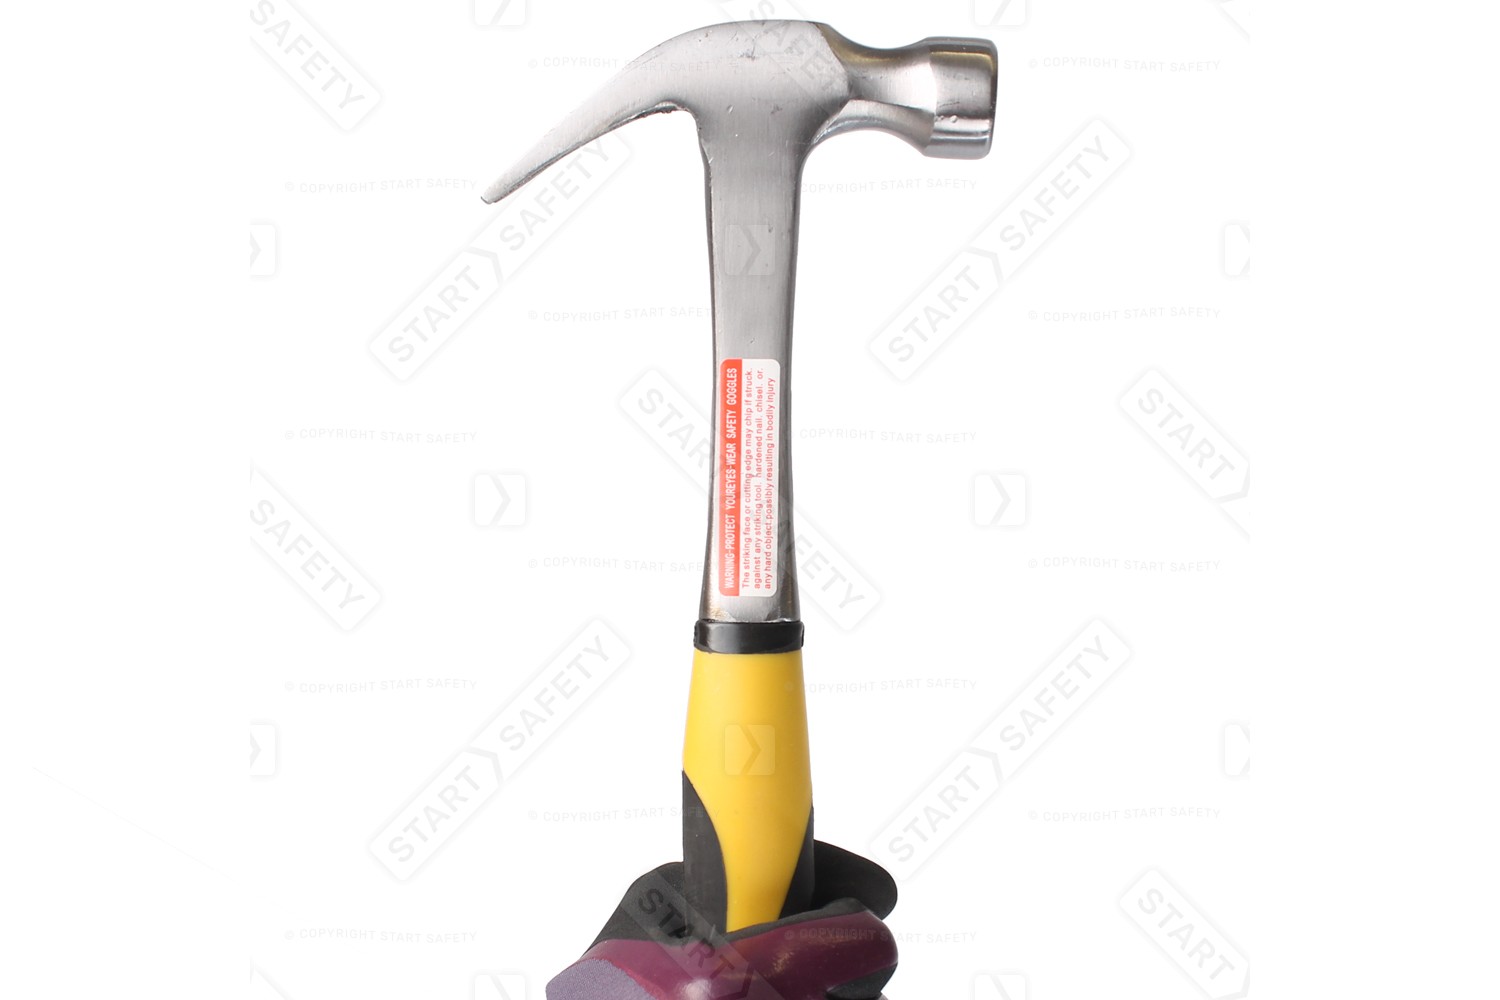 Forged Claw Hammer